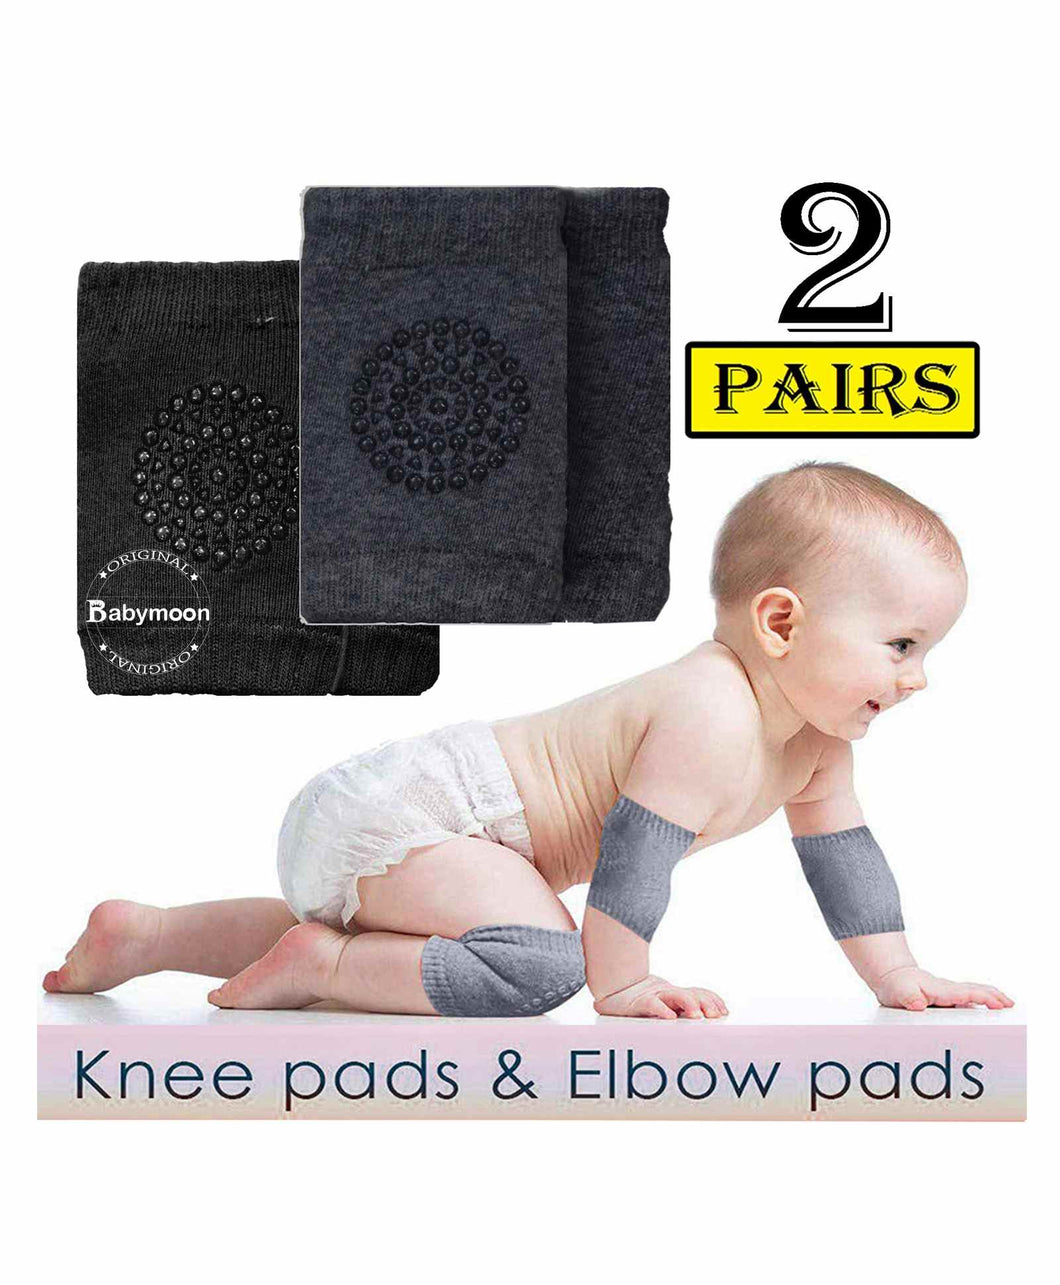 Babymoon Baby Kids Knee Pads AntiSlip Stretchable Knee Cap Elbow Safety - Black & DarkGrey